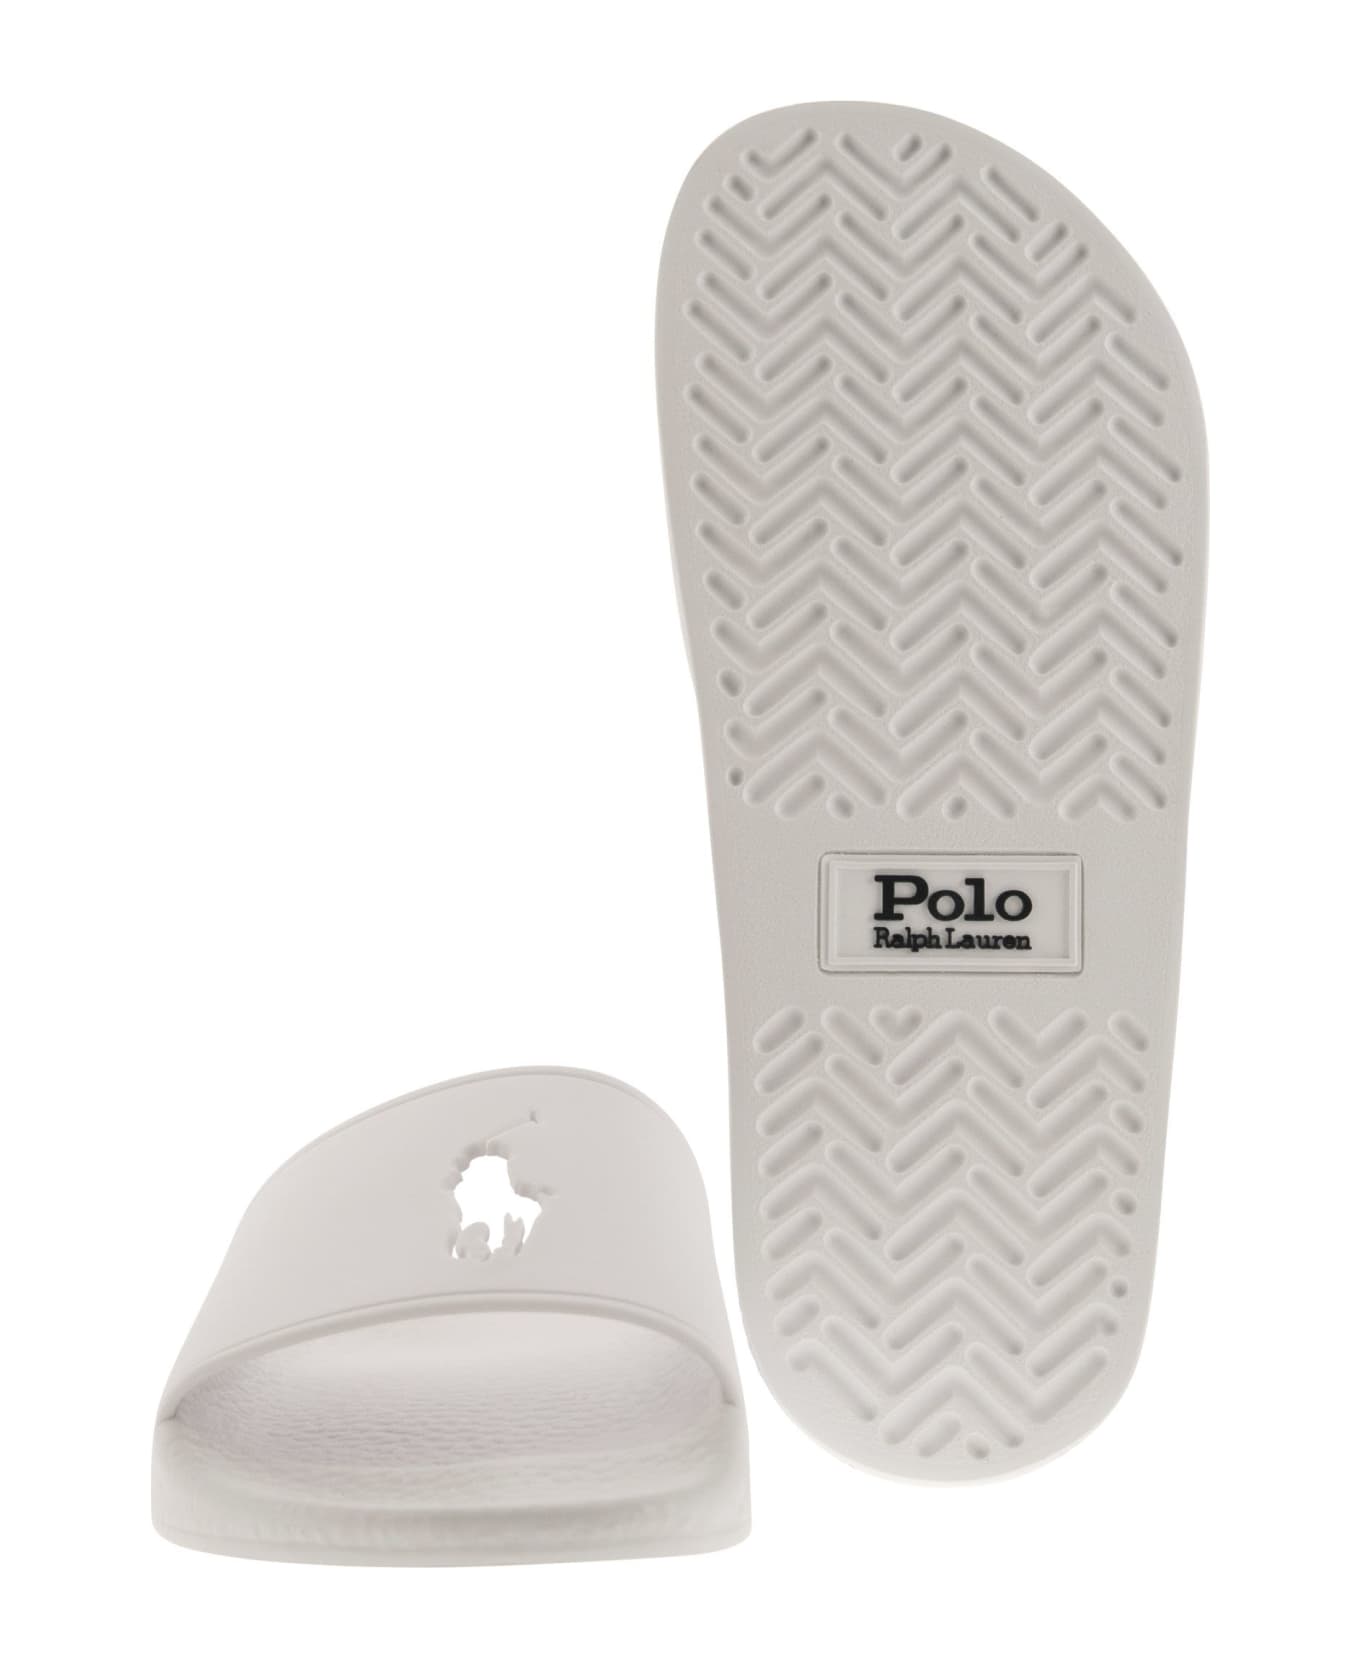 Polo Ralph Lauren Big Pony Slippers - White